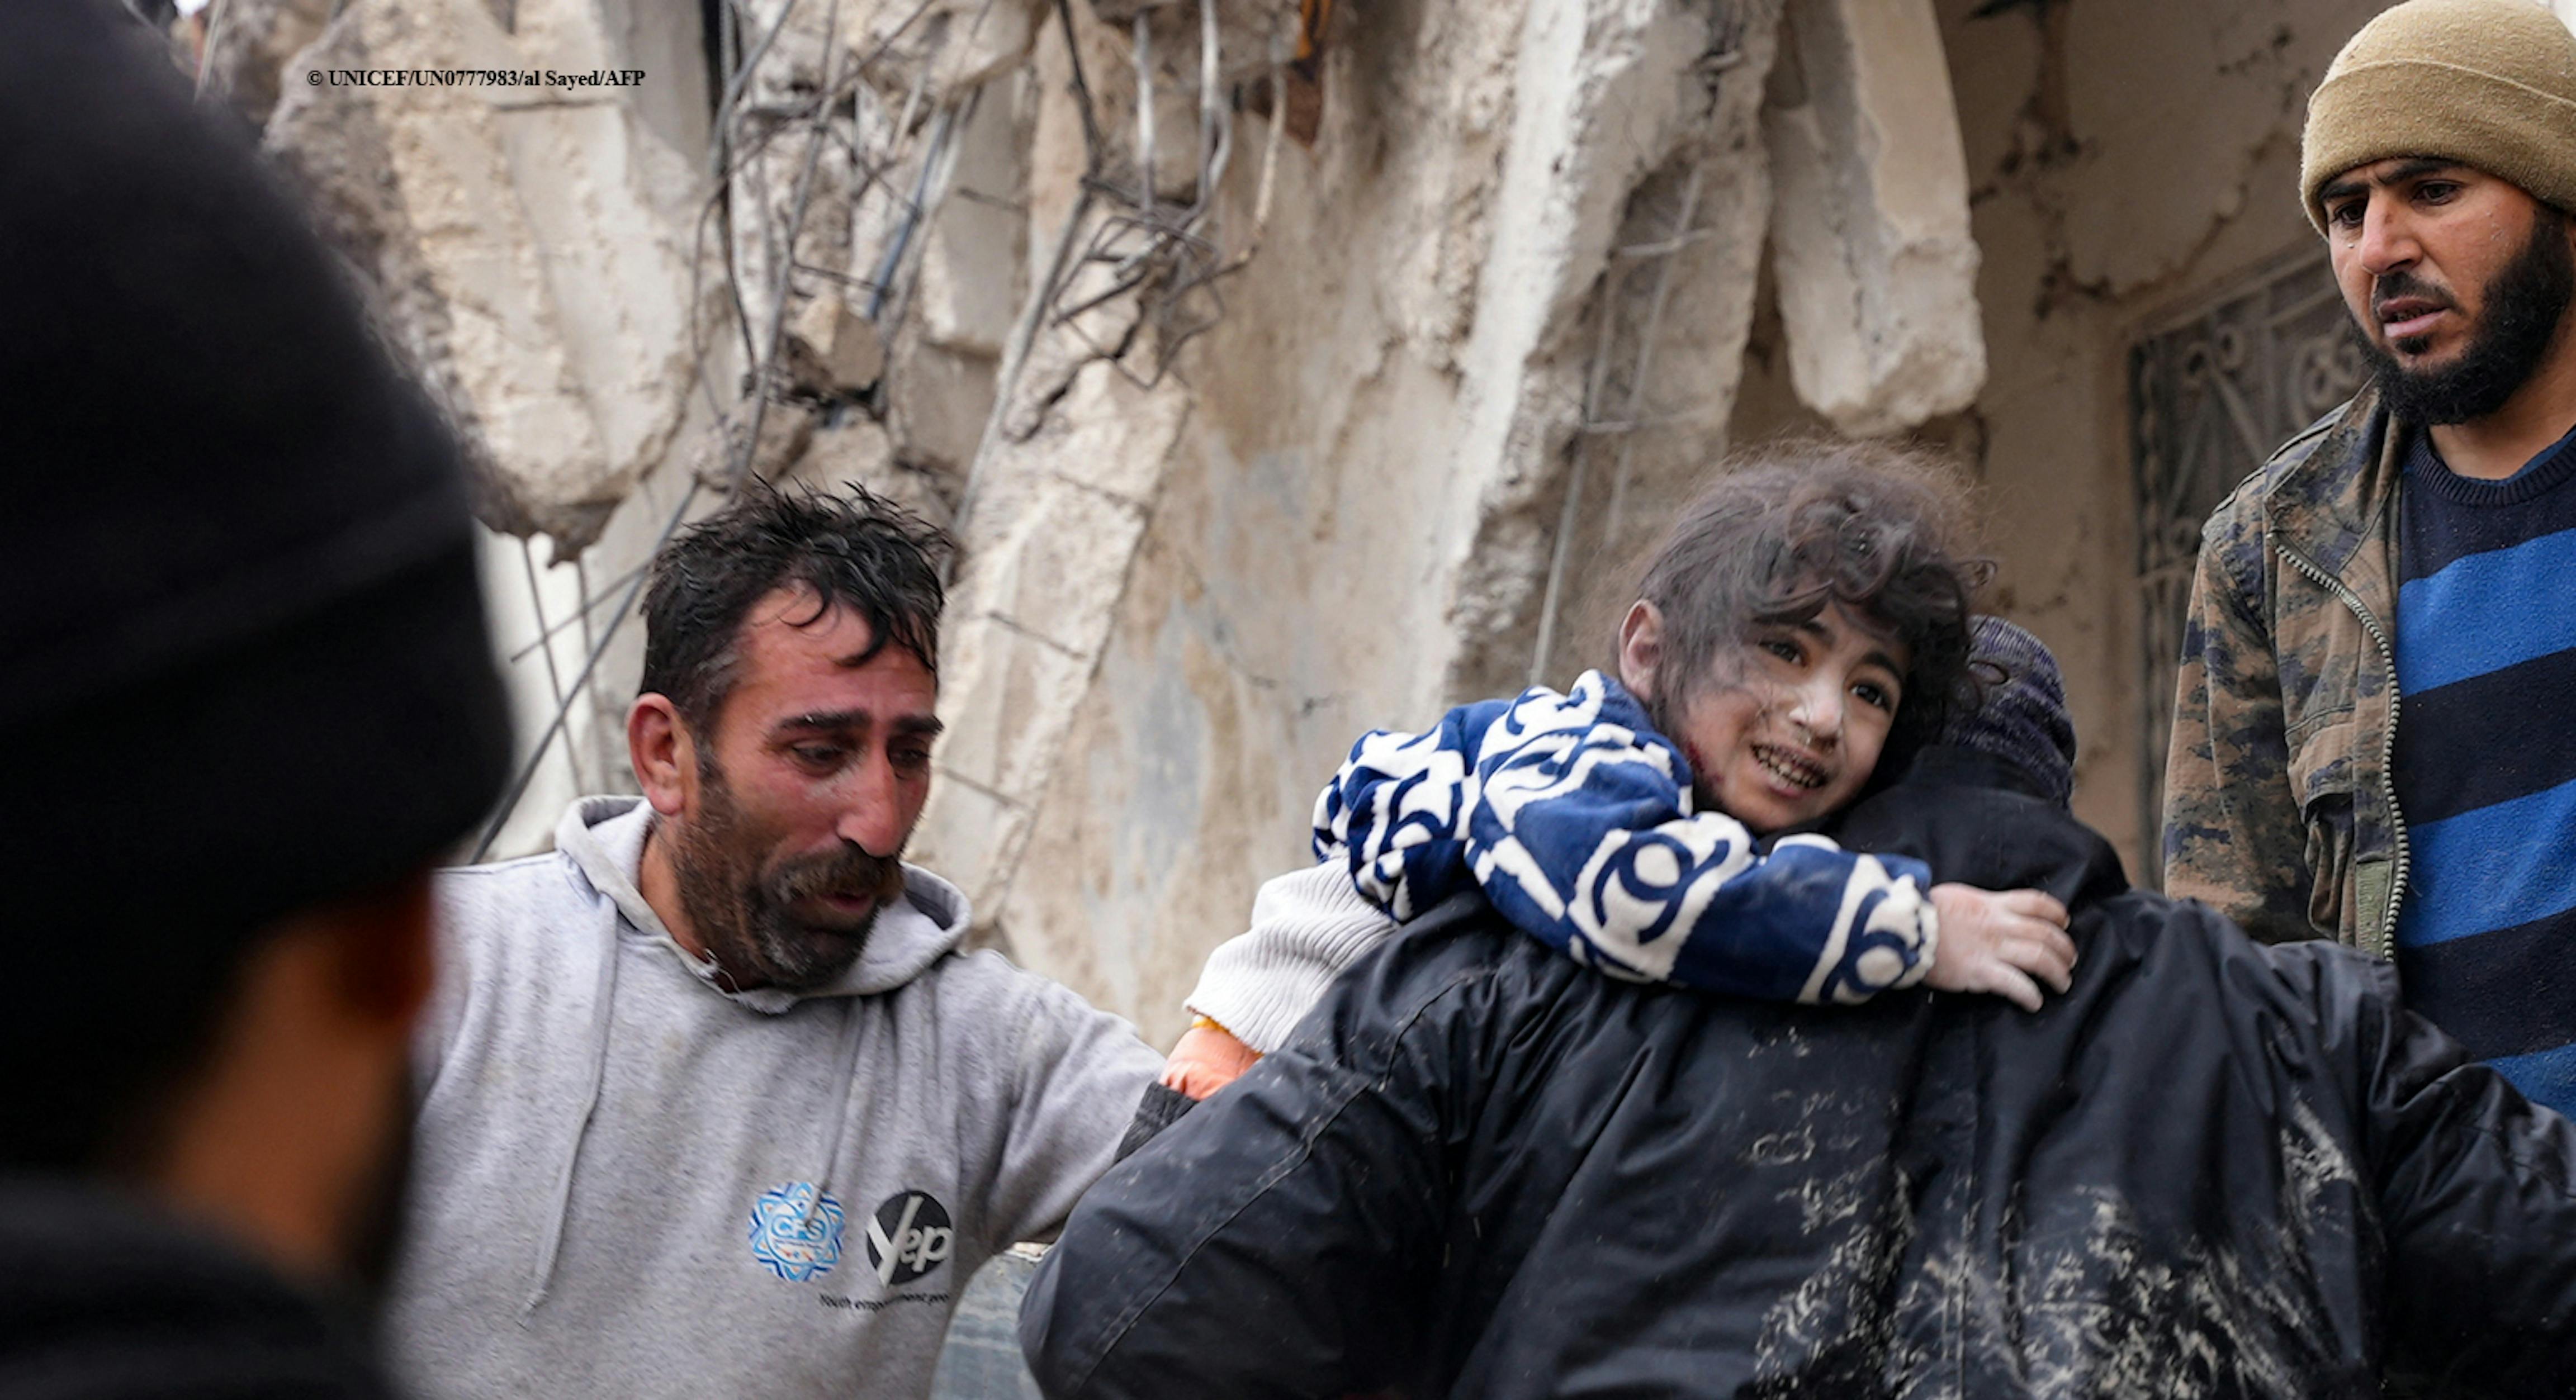 Emergenza Terremoto Turchia e Siria, febbraio 2023 © UNICEF/UN0777983/al Sayed/AFP